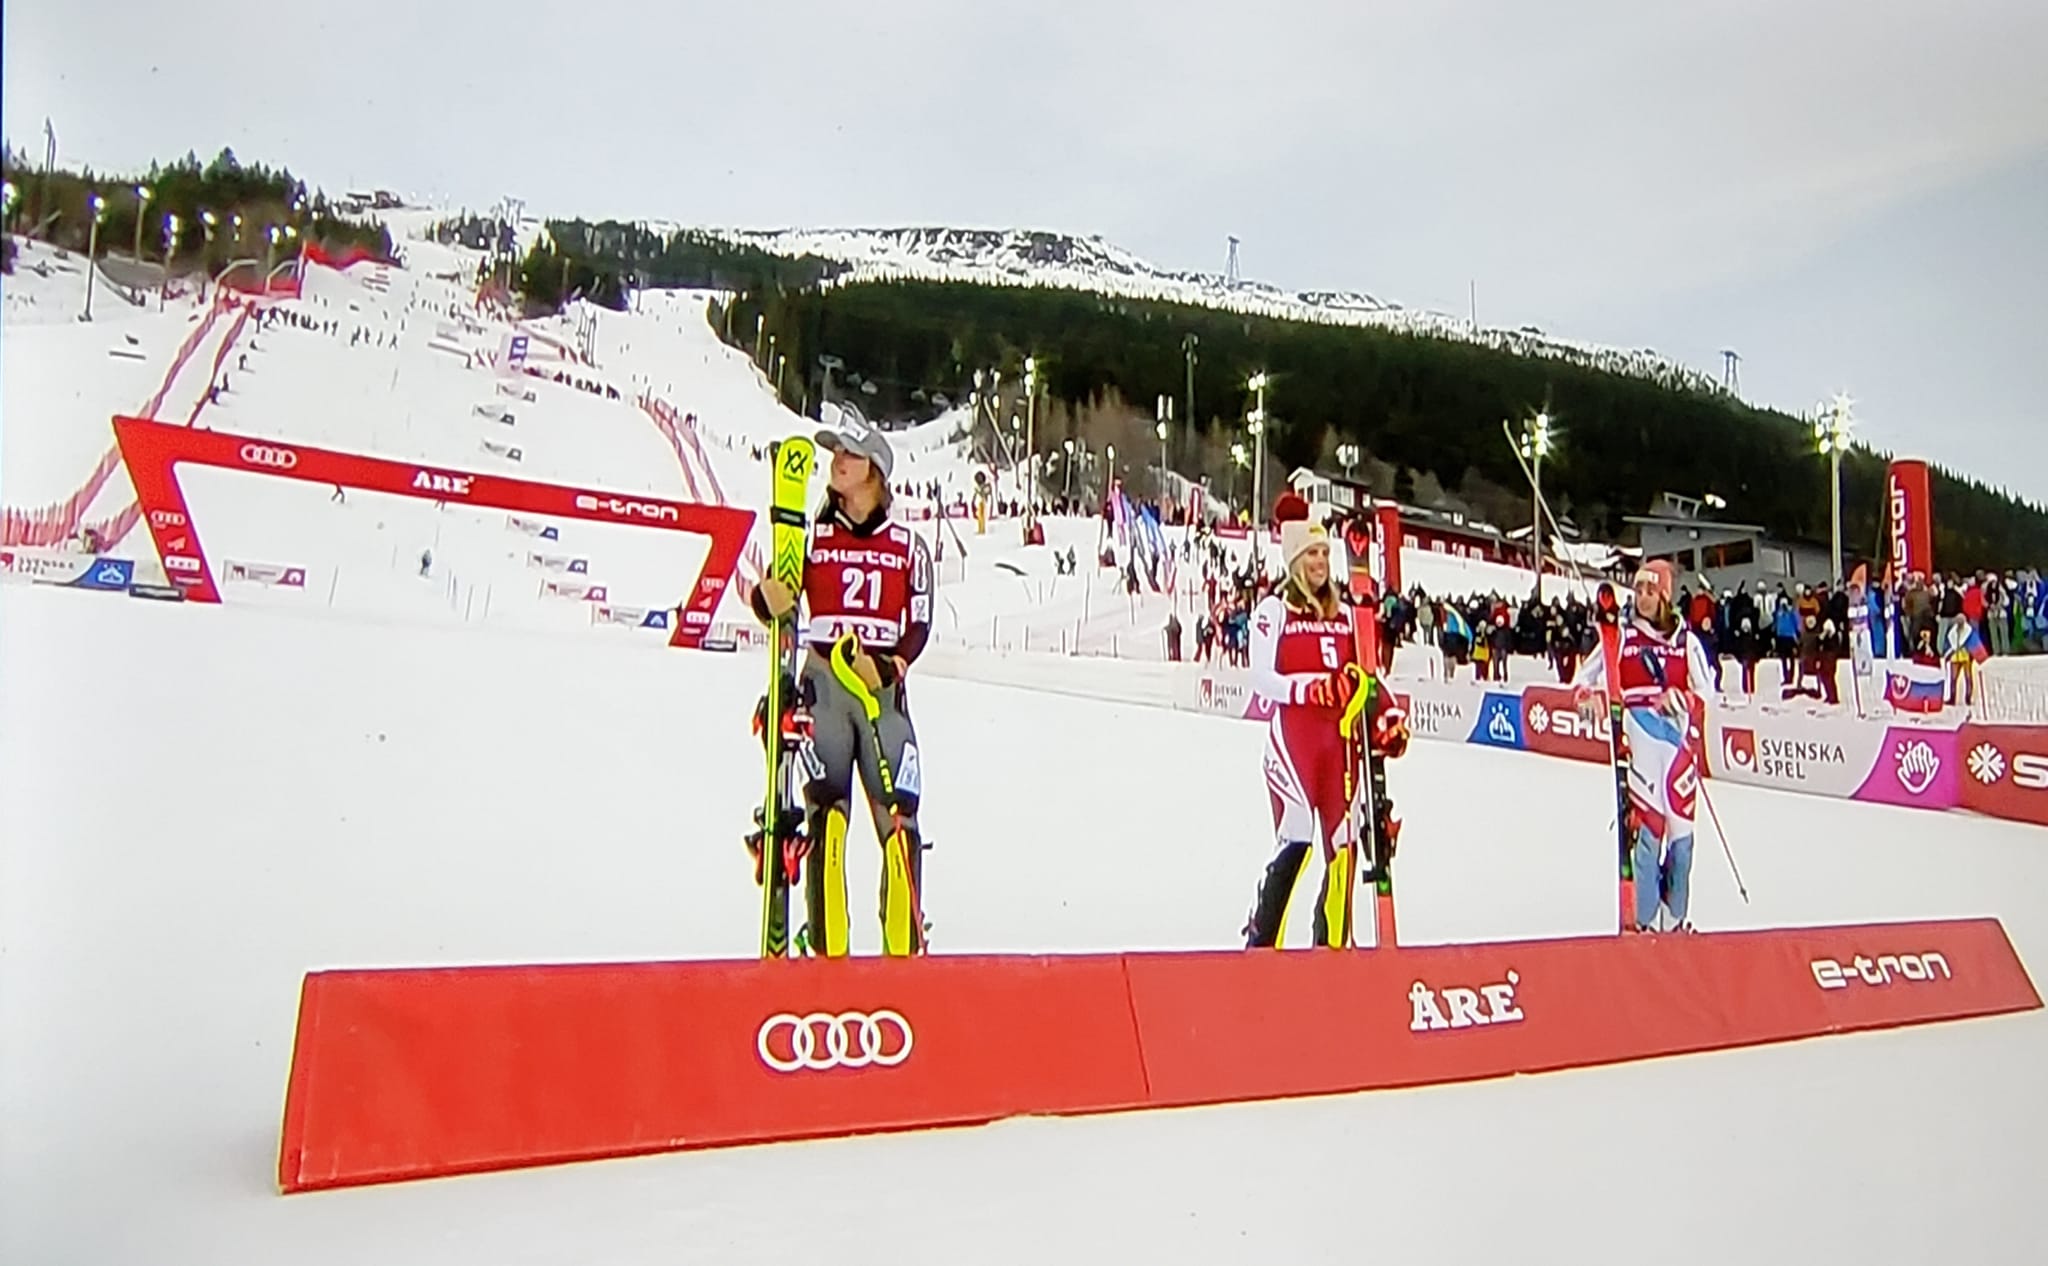 Katharina Liensberger gana el slalom de Are y Henrik Kristoffersen el gigante de Kranjska Gora